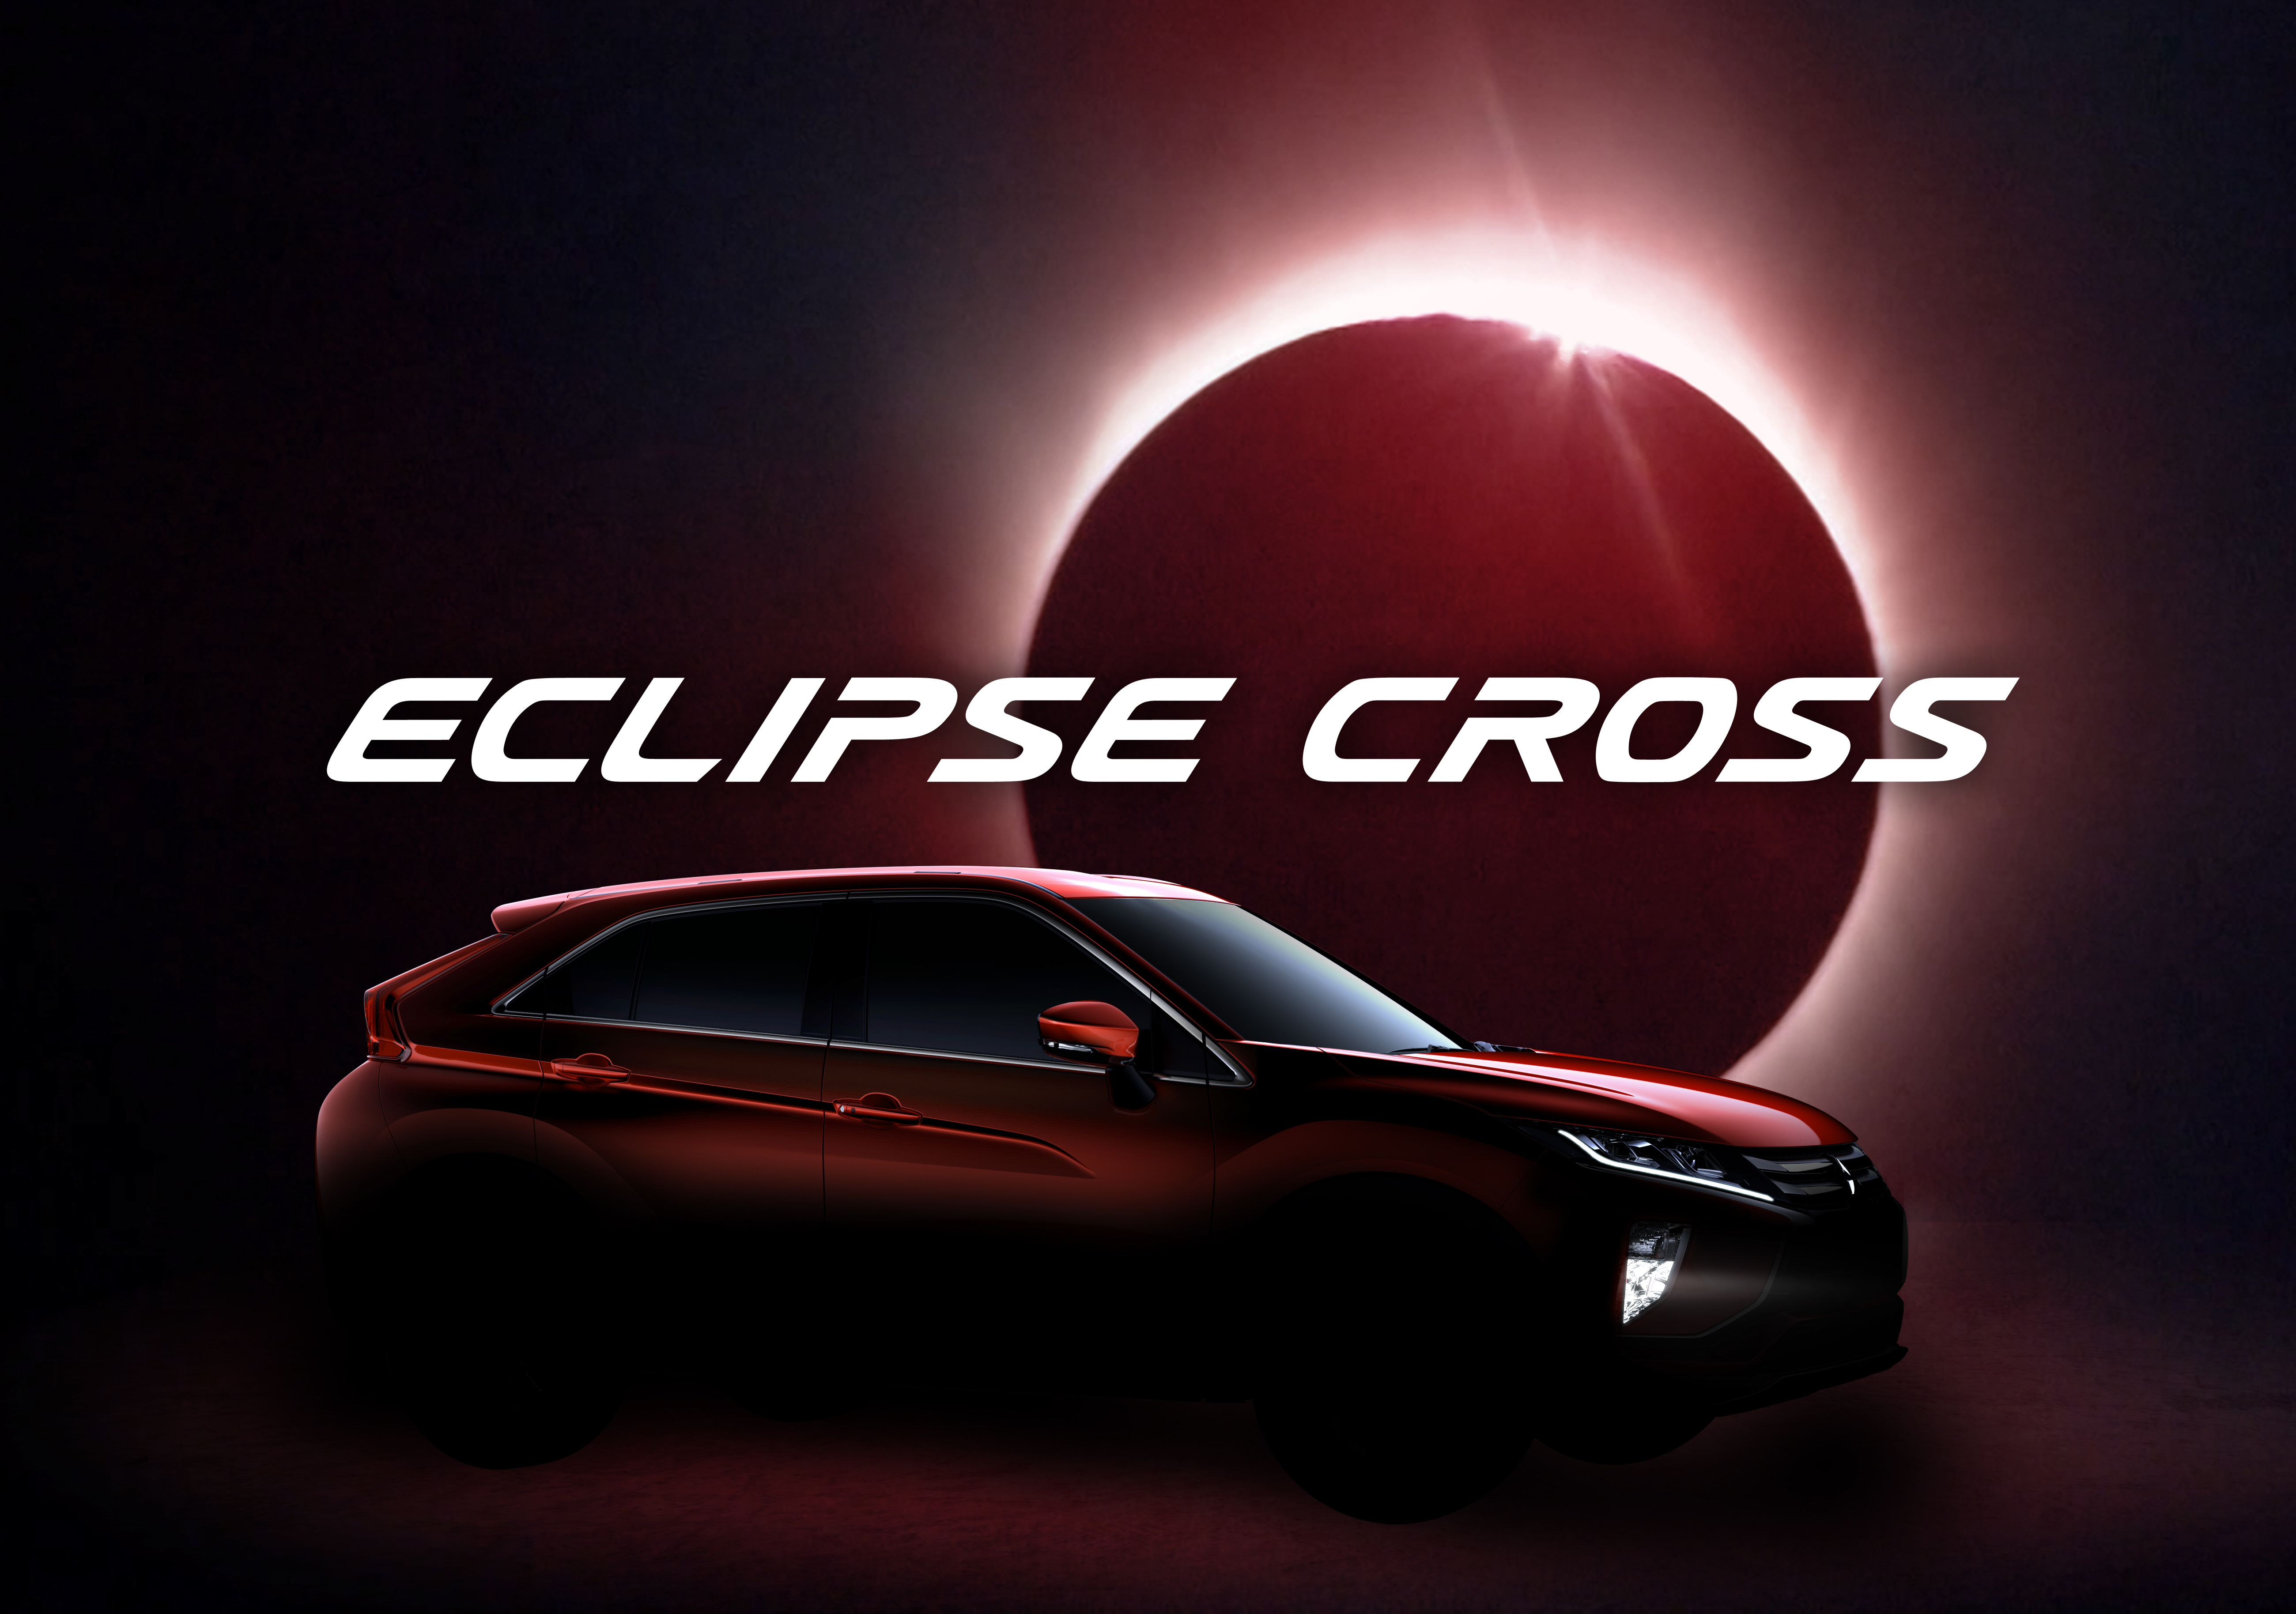 Mitsubishi teases new Eclipse Cross ahead of Geneva Motor Show